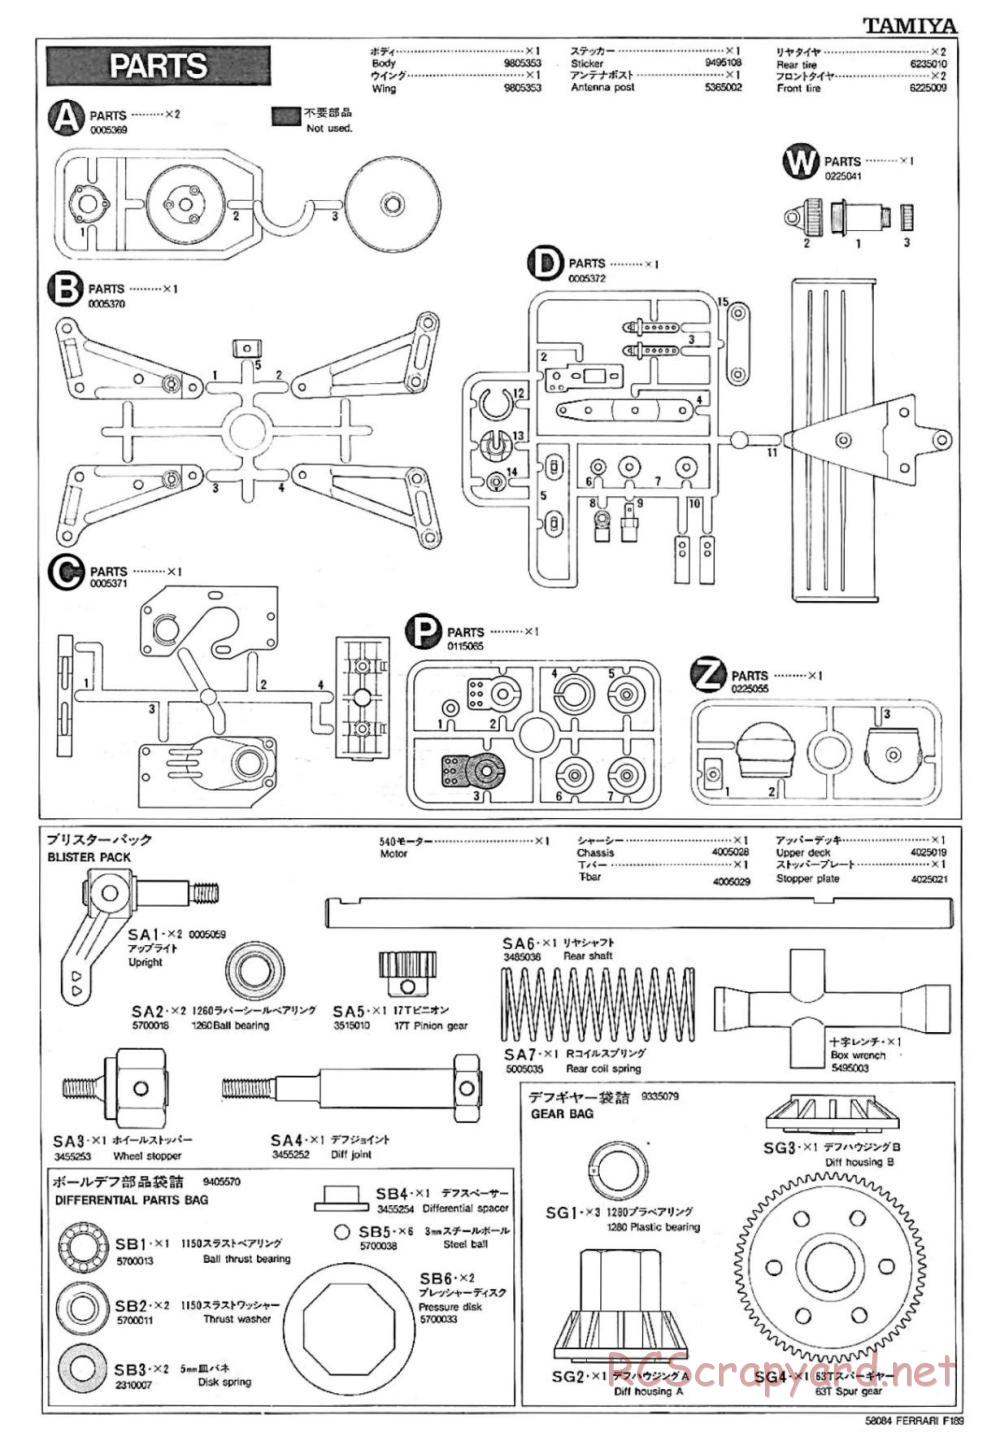 Tamiya - Ferrari F189 Late Version - 58084 - Manual - Page 17